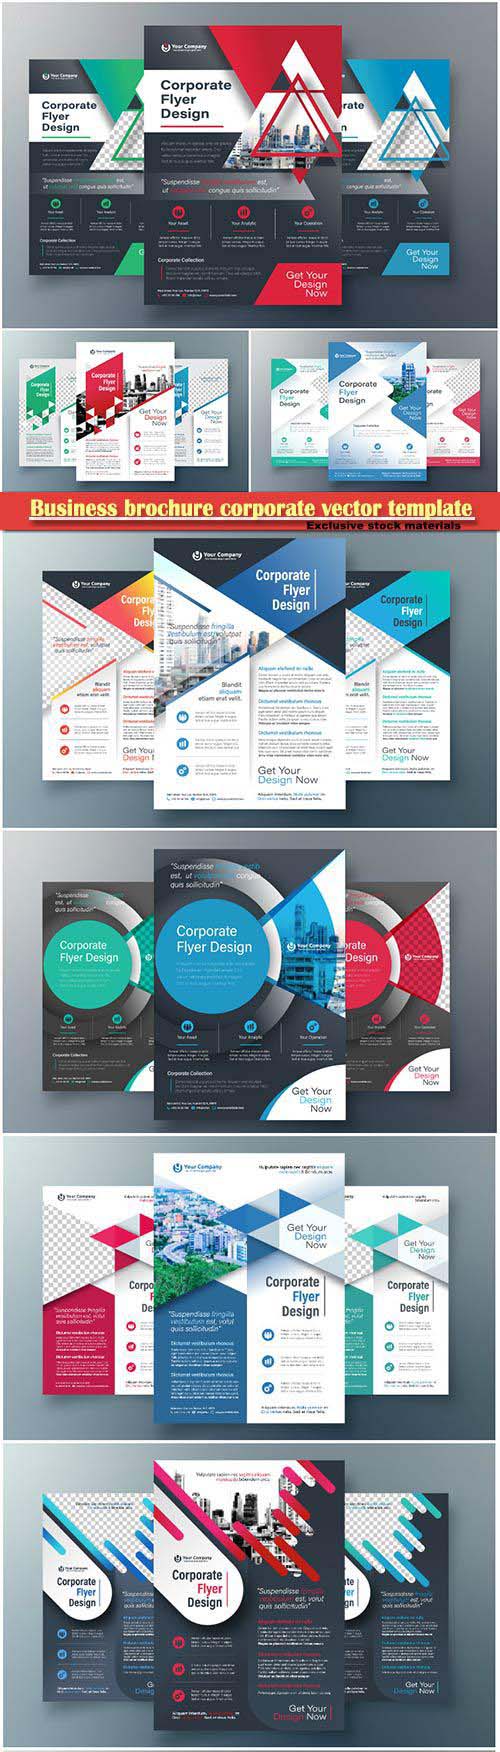 Business brochure corporate vector template, magazine flyer mockup # 7